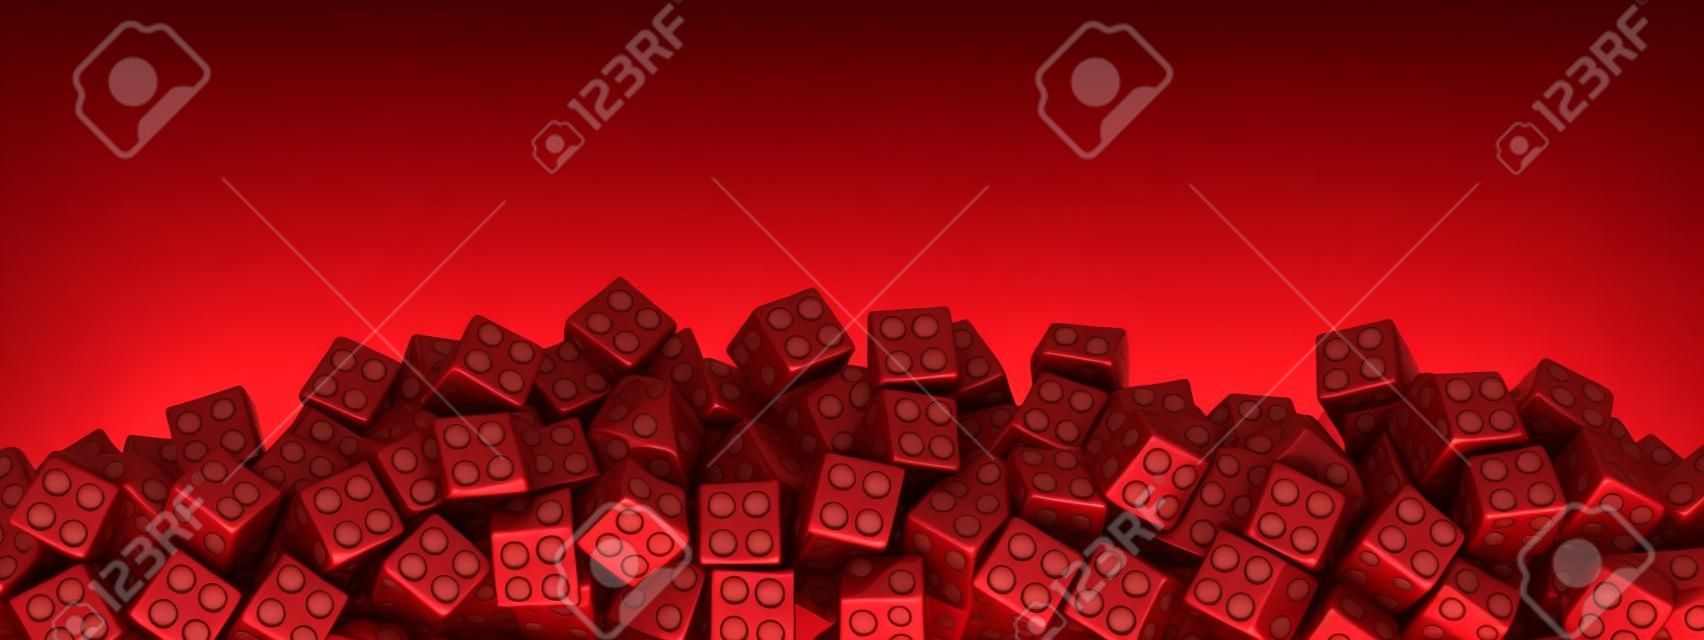 Rode kortingsblokjes. 3D illustratie.